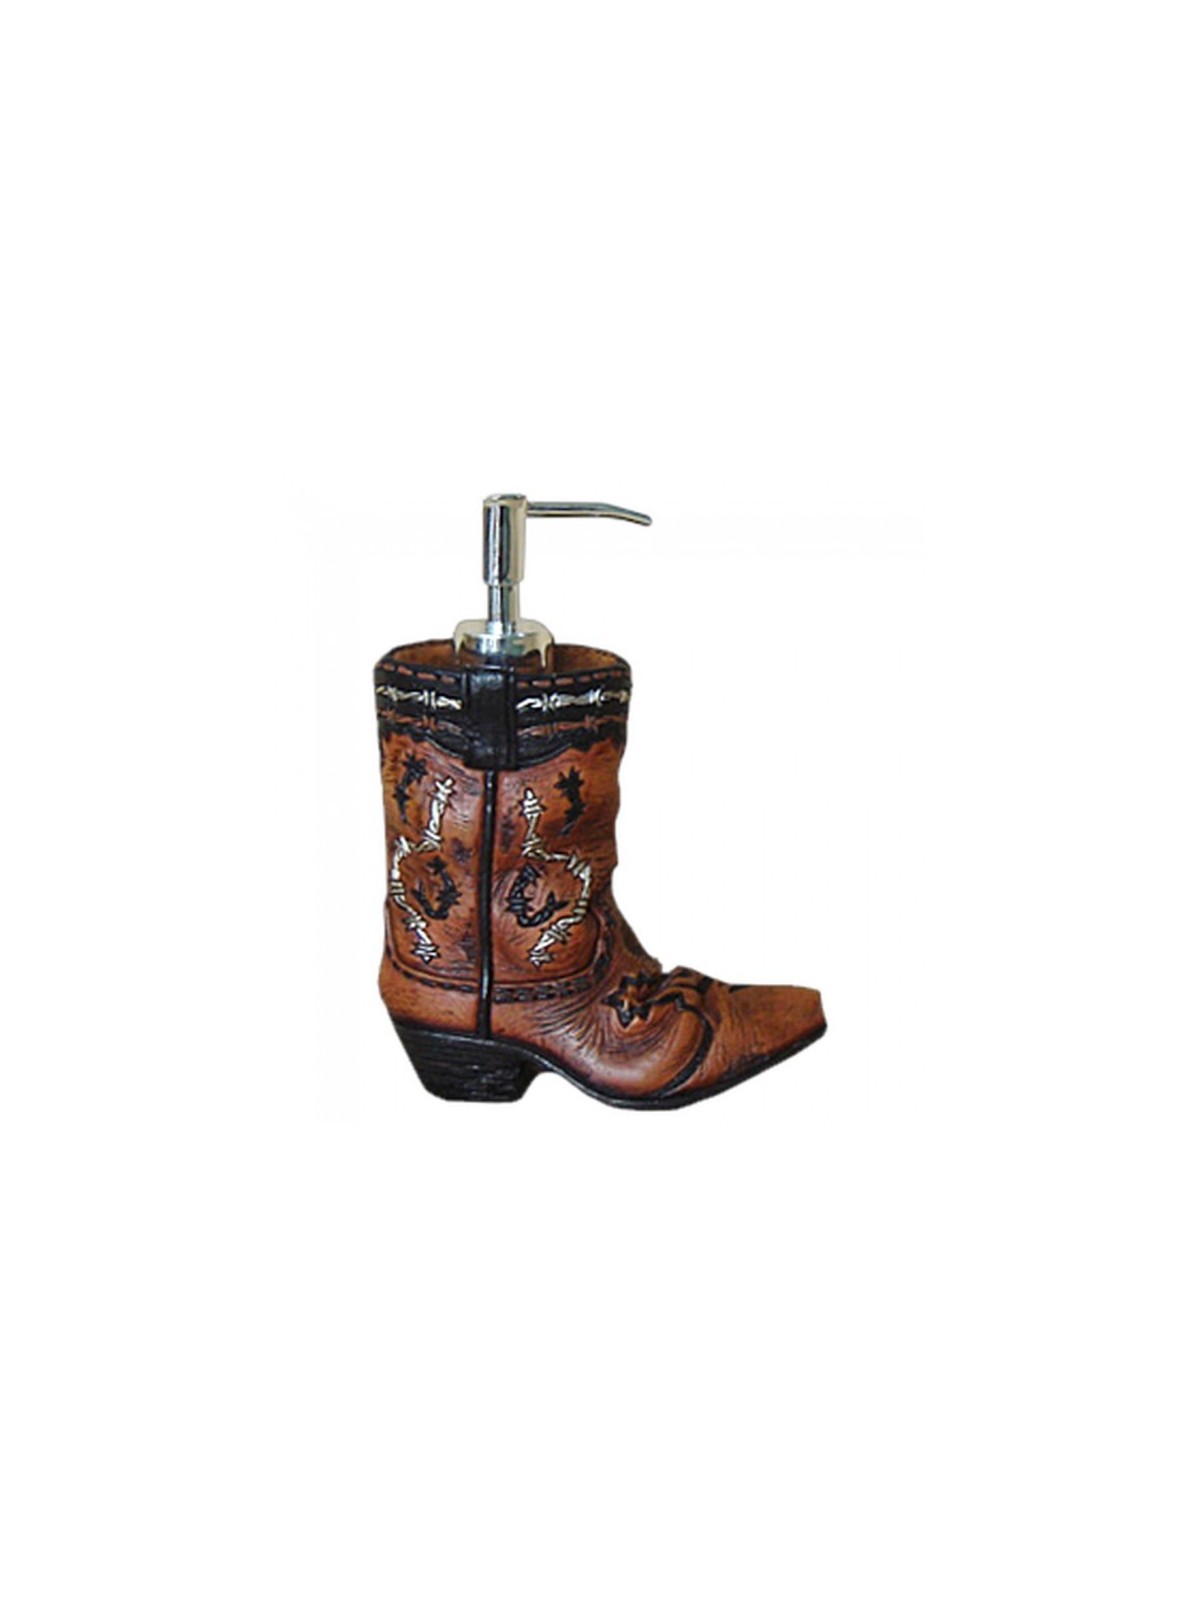 Cowboy Boot Soap Dispencer